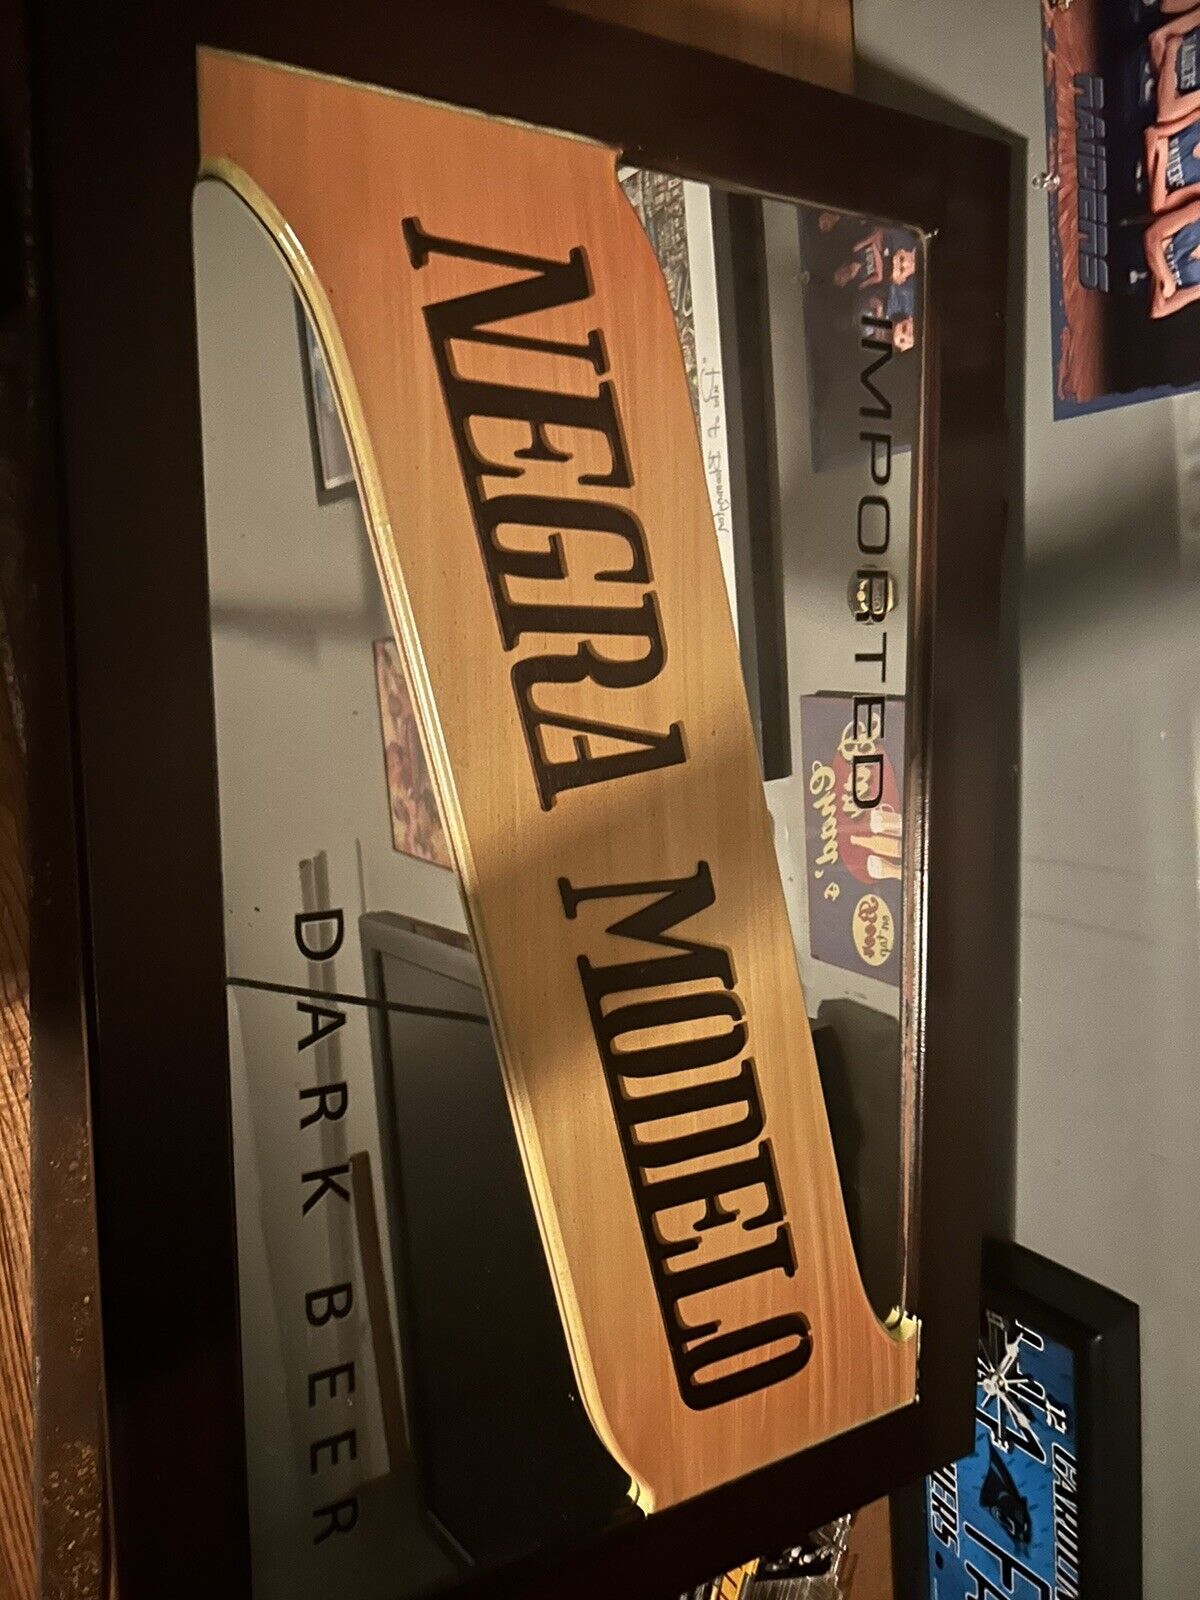 Negra Modelo Beer Mirror Bar Sign Advertising Frame Wood 28x18 rare vintage 3D